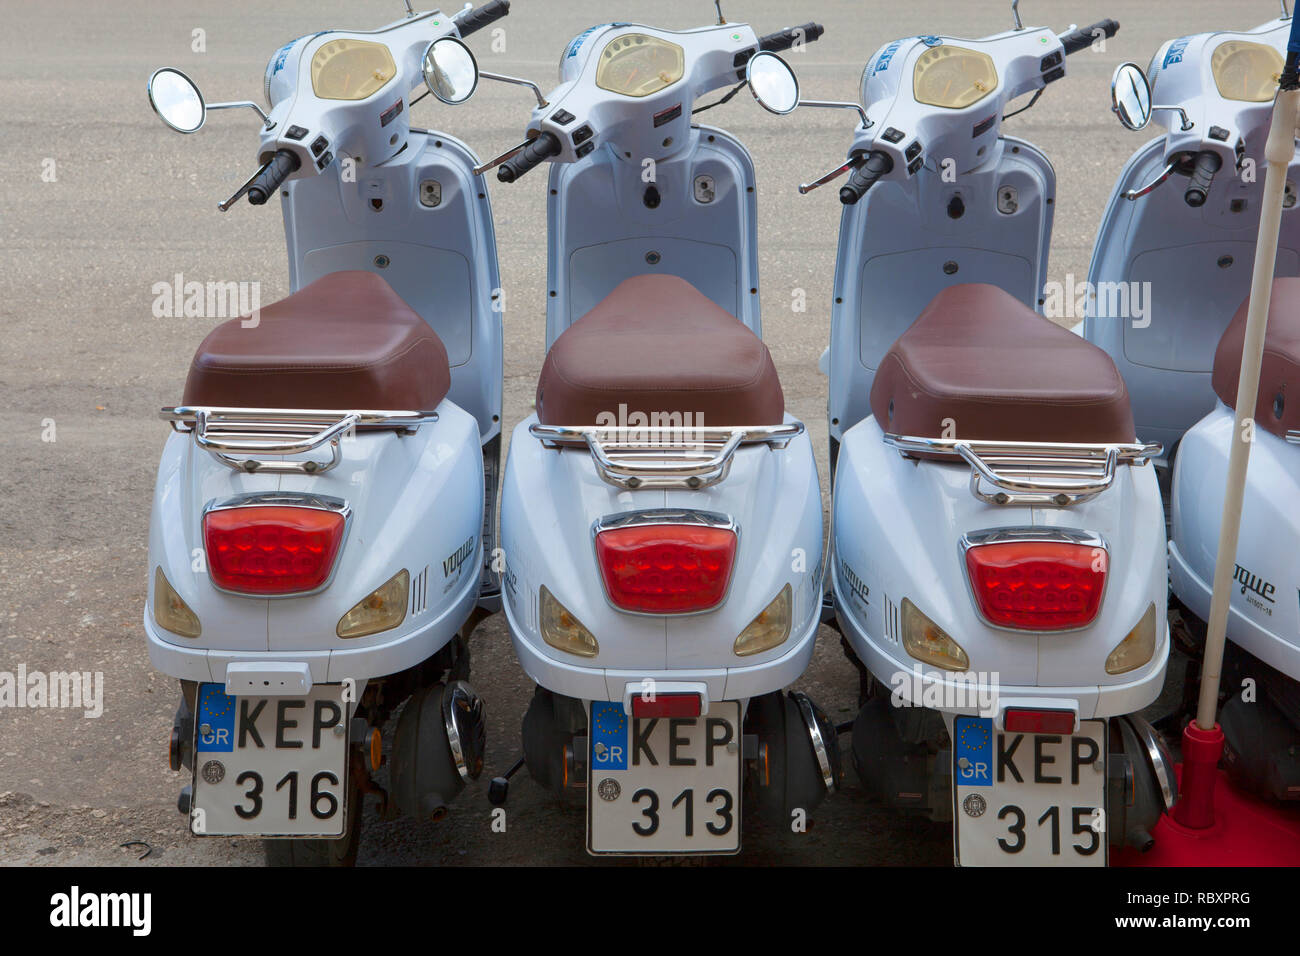 Moped Rental Immagini e Fotos Stock - Alamy